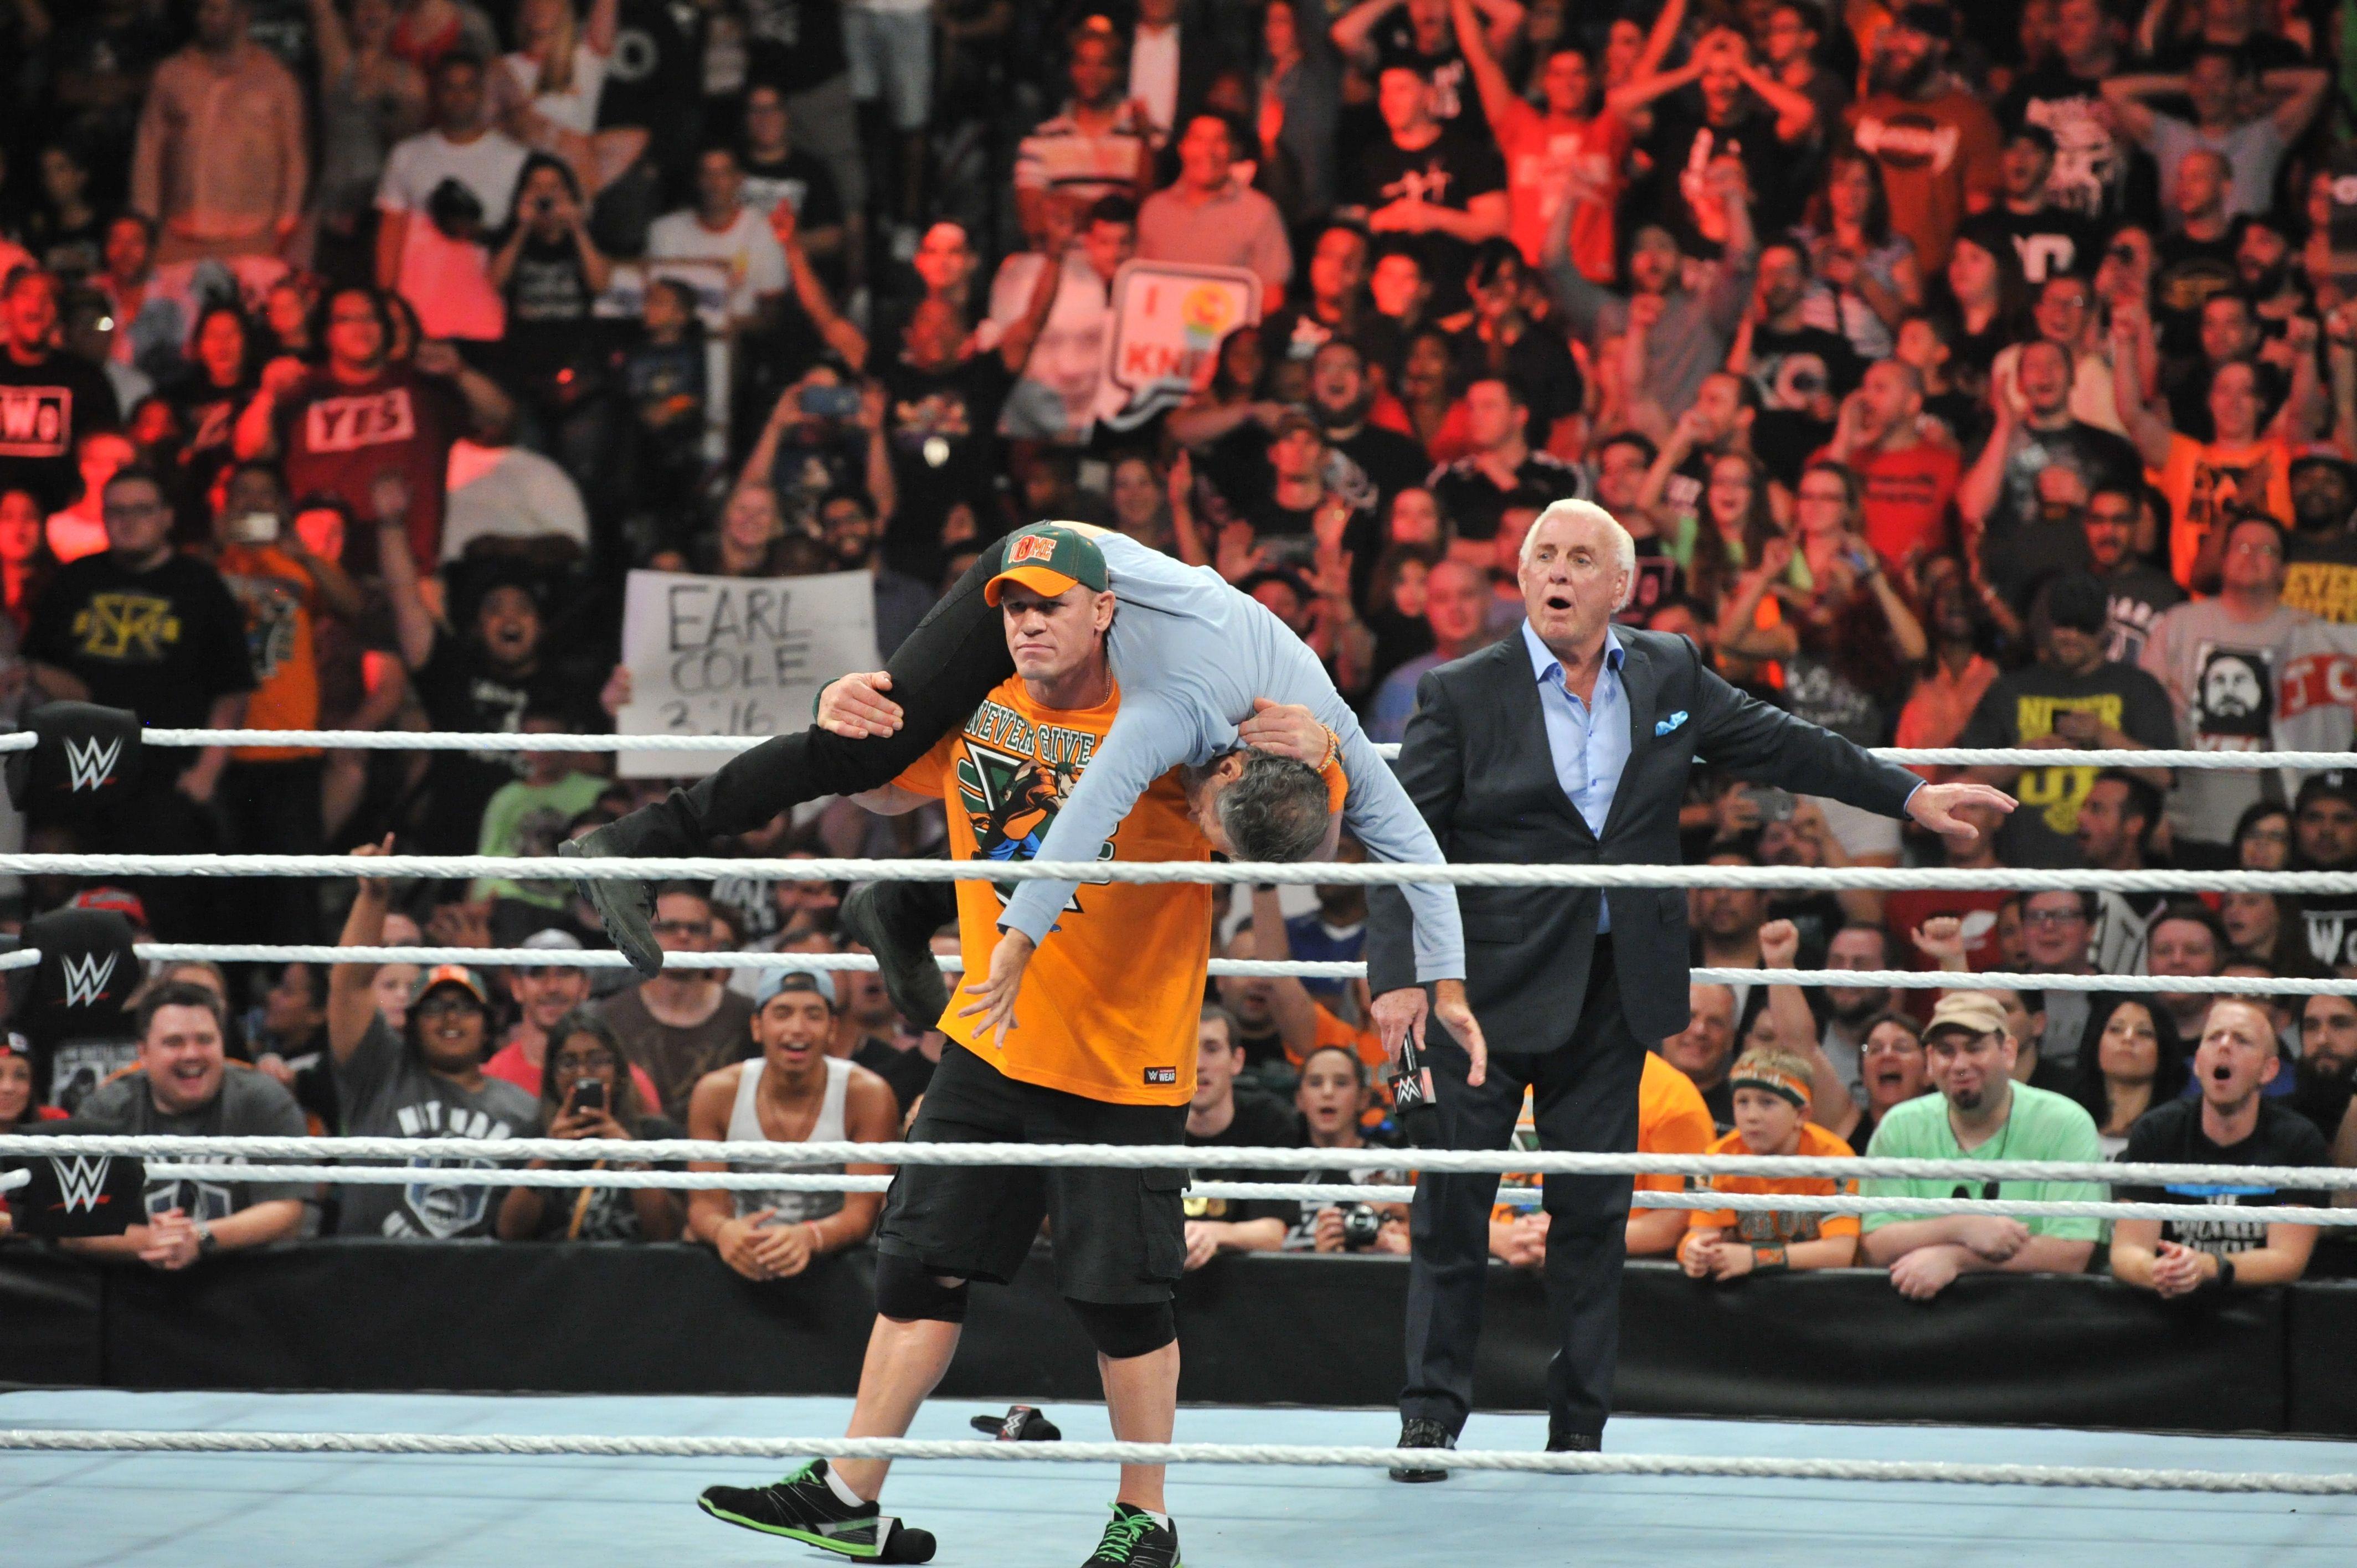 PHOTOS: John Cena Delivers an AA to Jon Stewart on WWE Raw Tonight